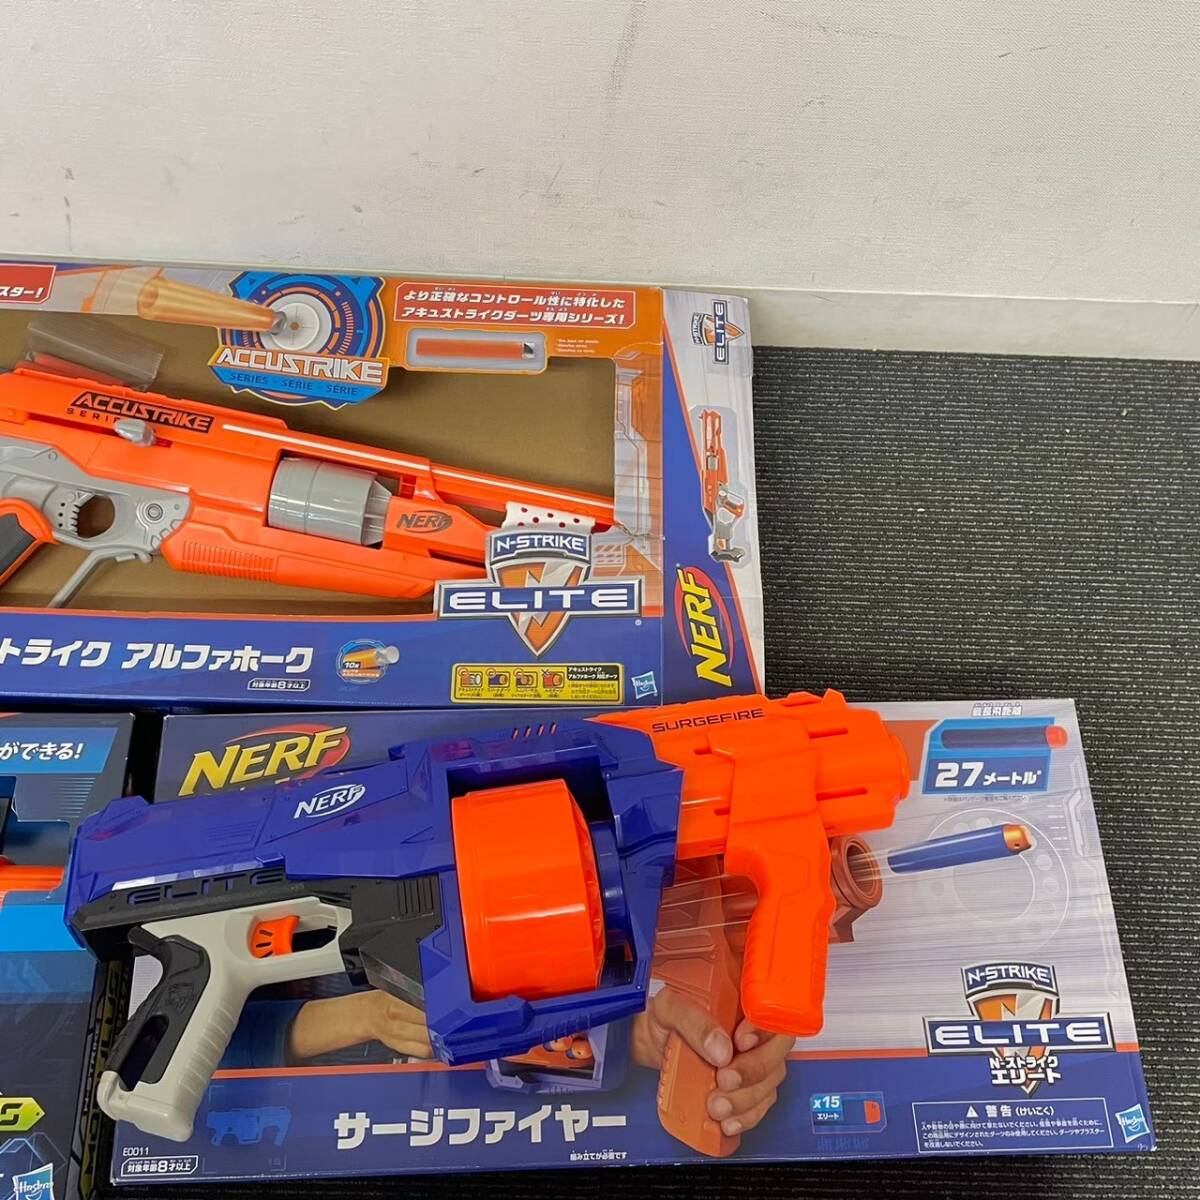 U429-K32-3895* NERFna-f toy gun 7 point summarize set akyu Strike aru Fork metie-ta- surge fire - other toy hobby 